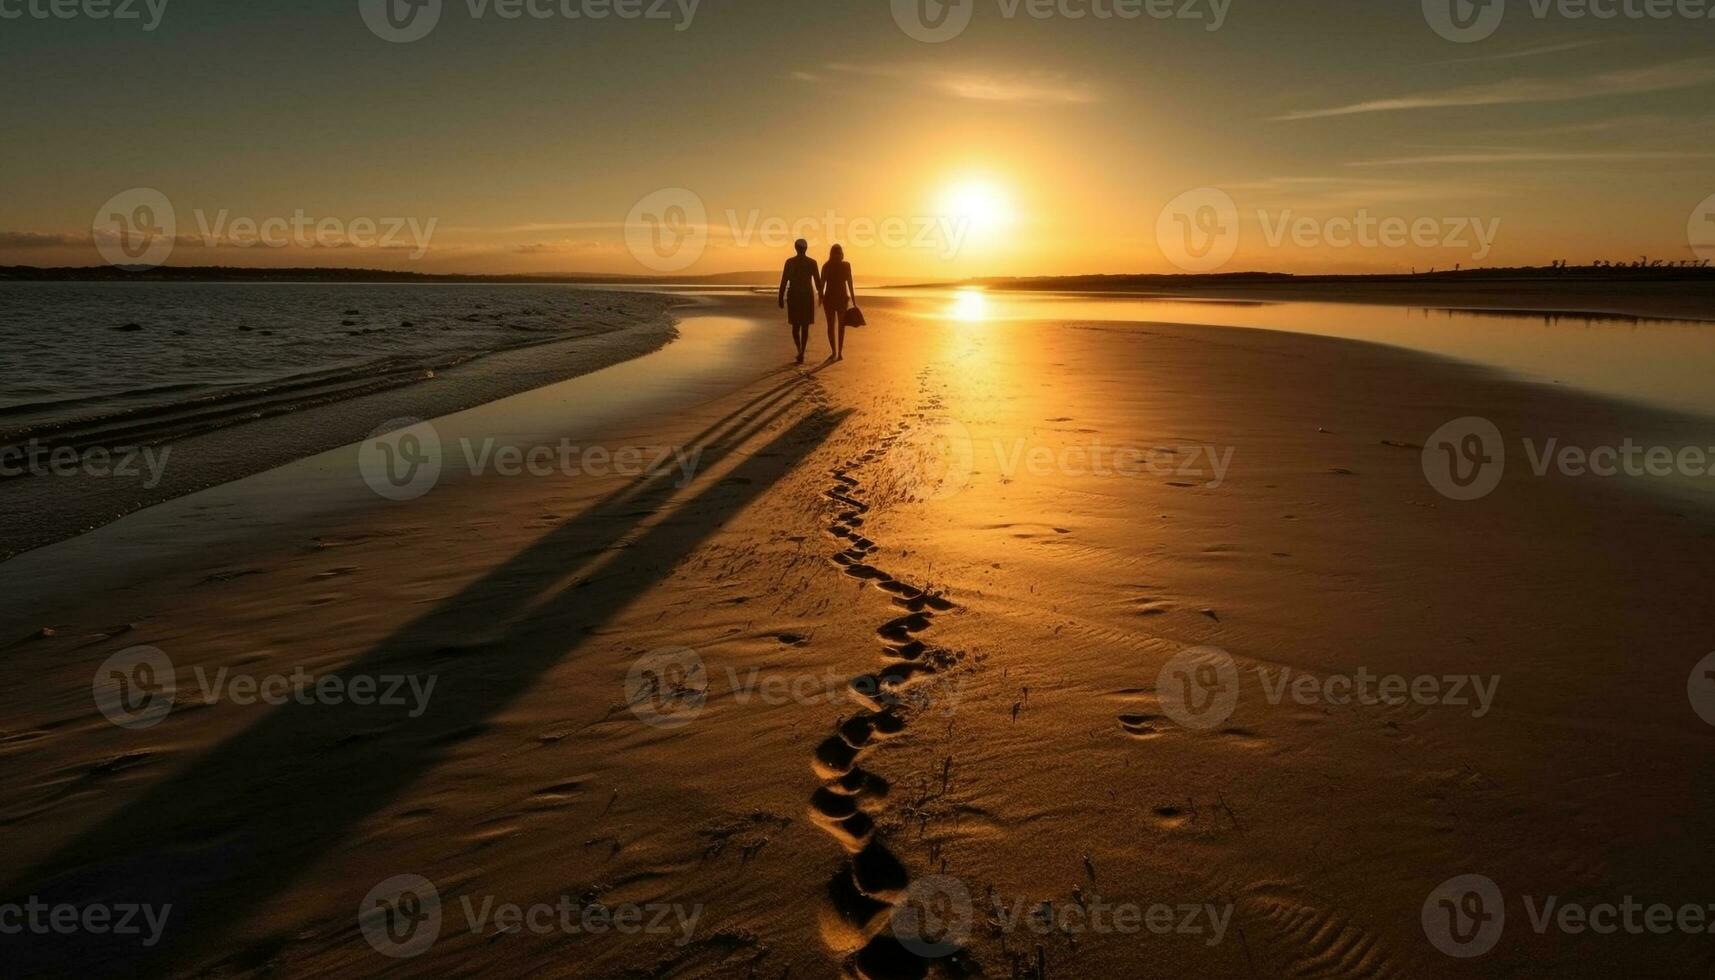 Silhouettes walking on sand, enjoying sunset romance generated by AI photo